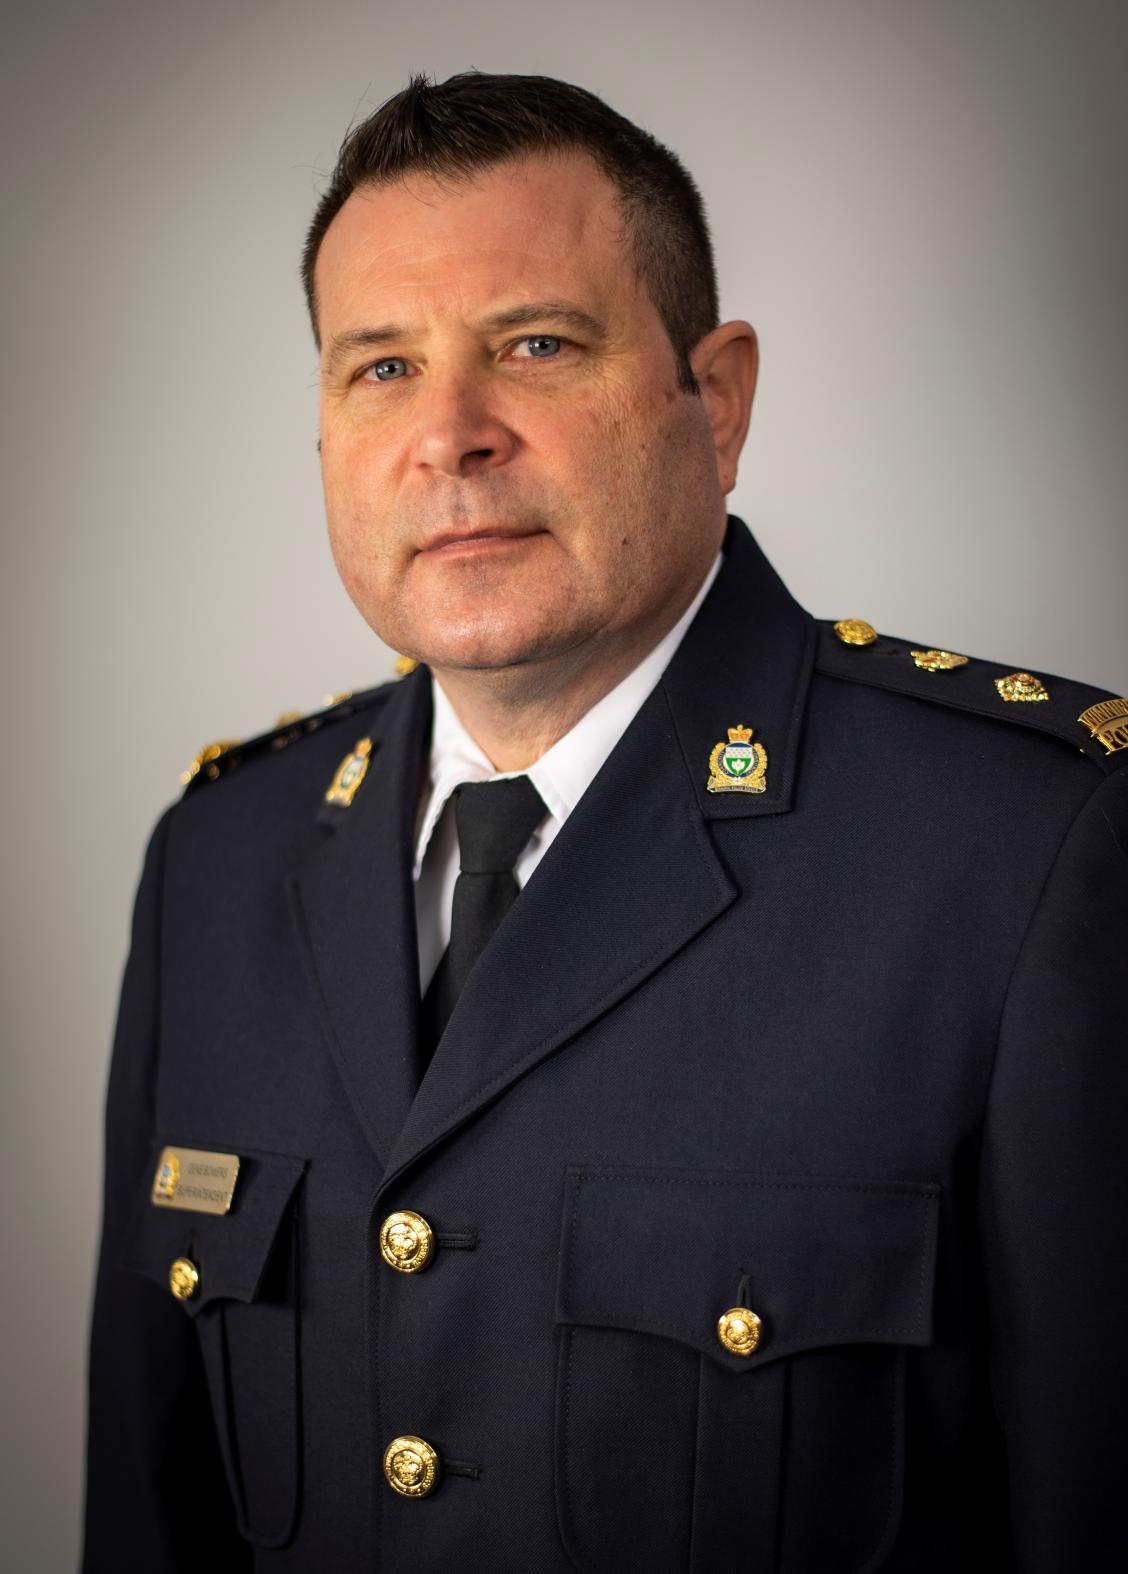 Deputy Chief Gene Bowers